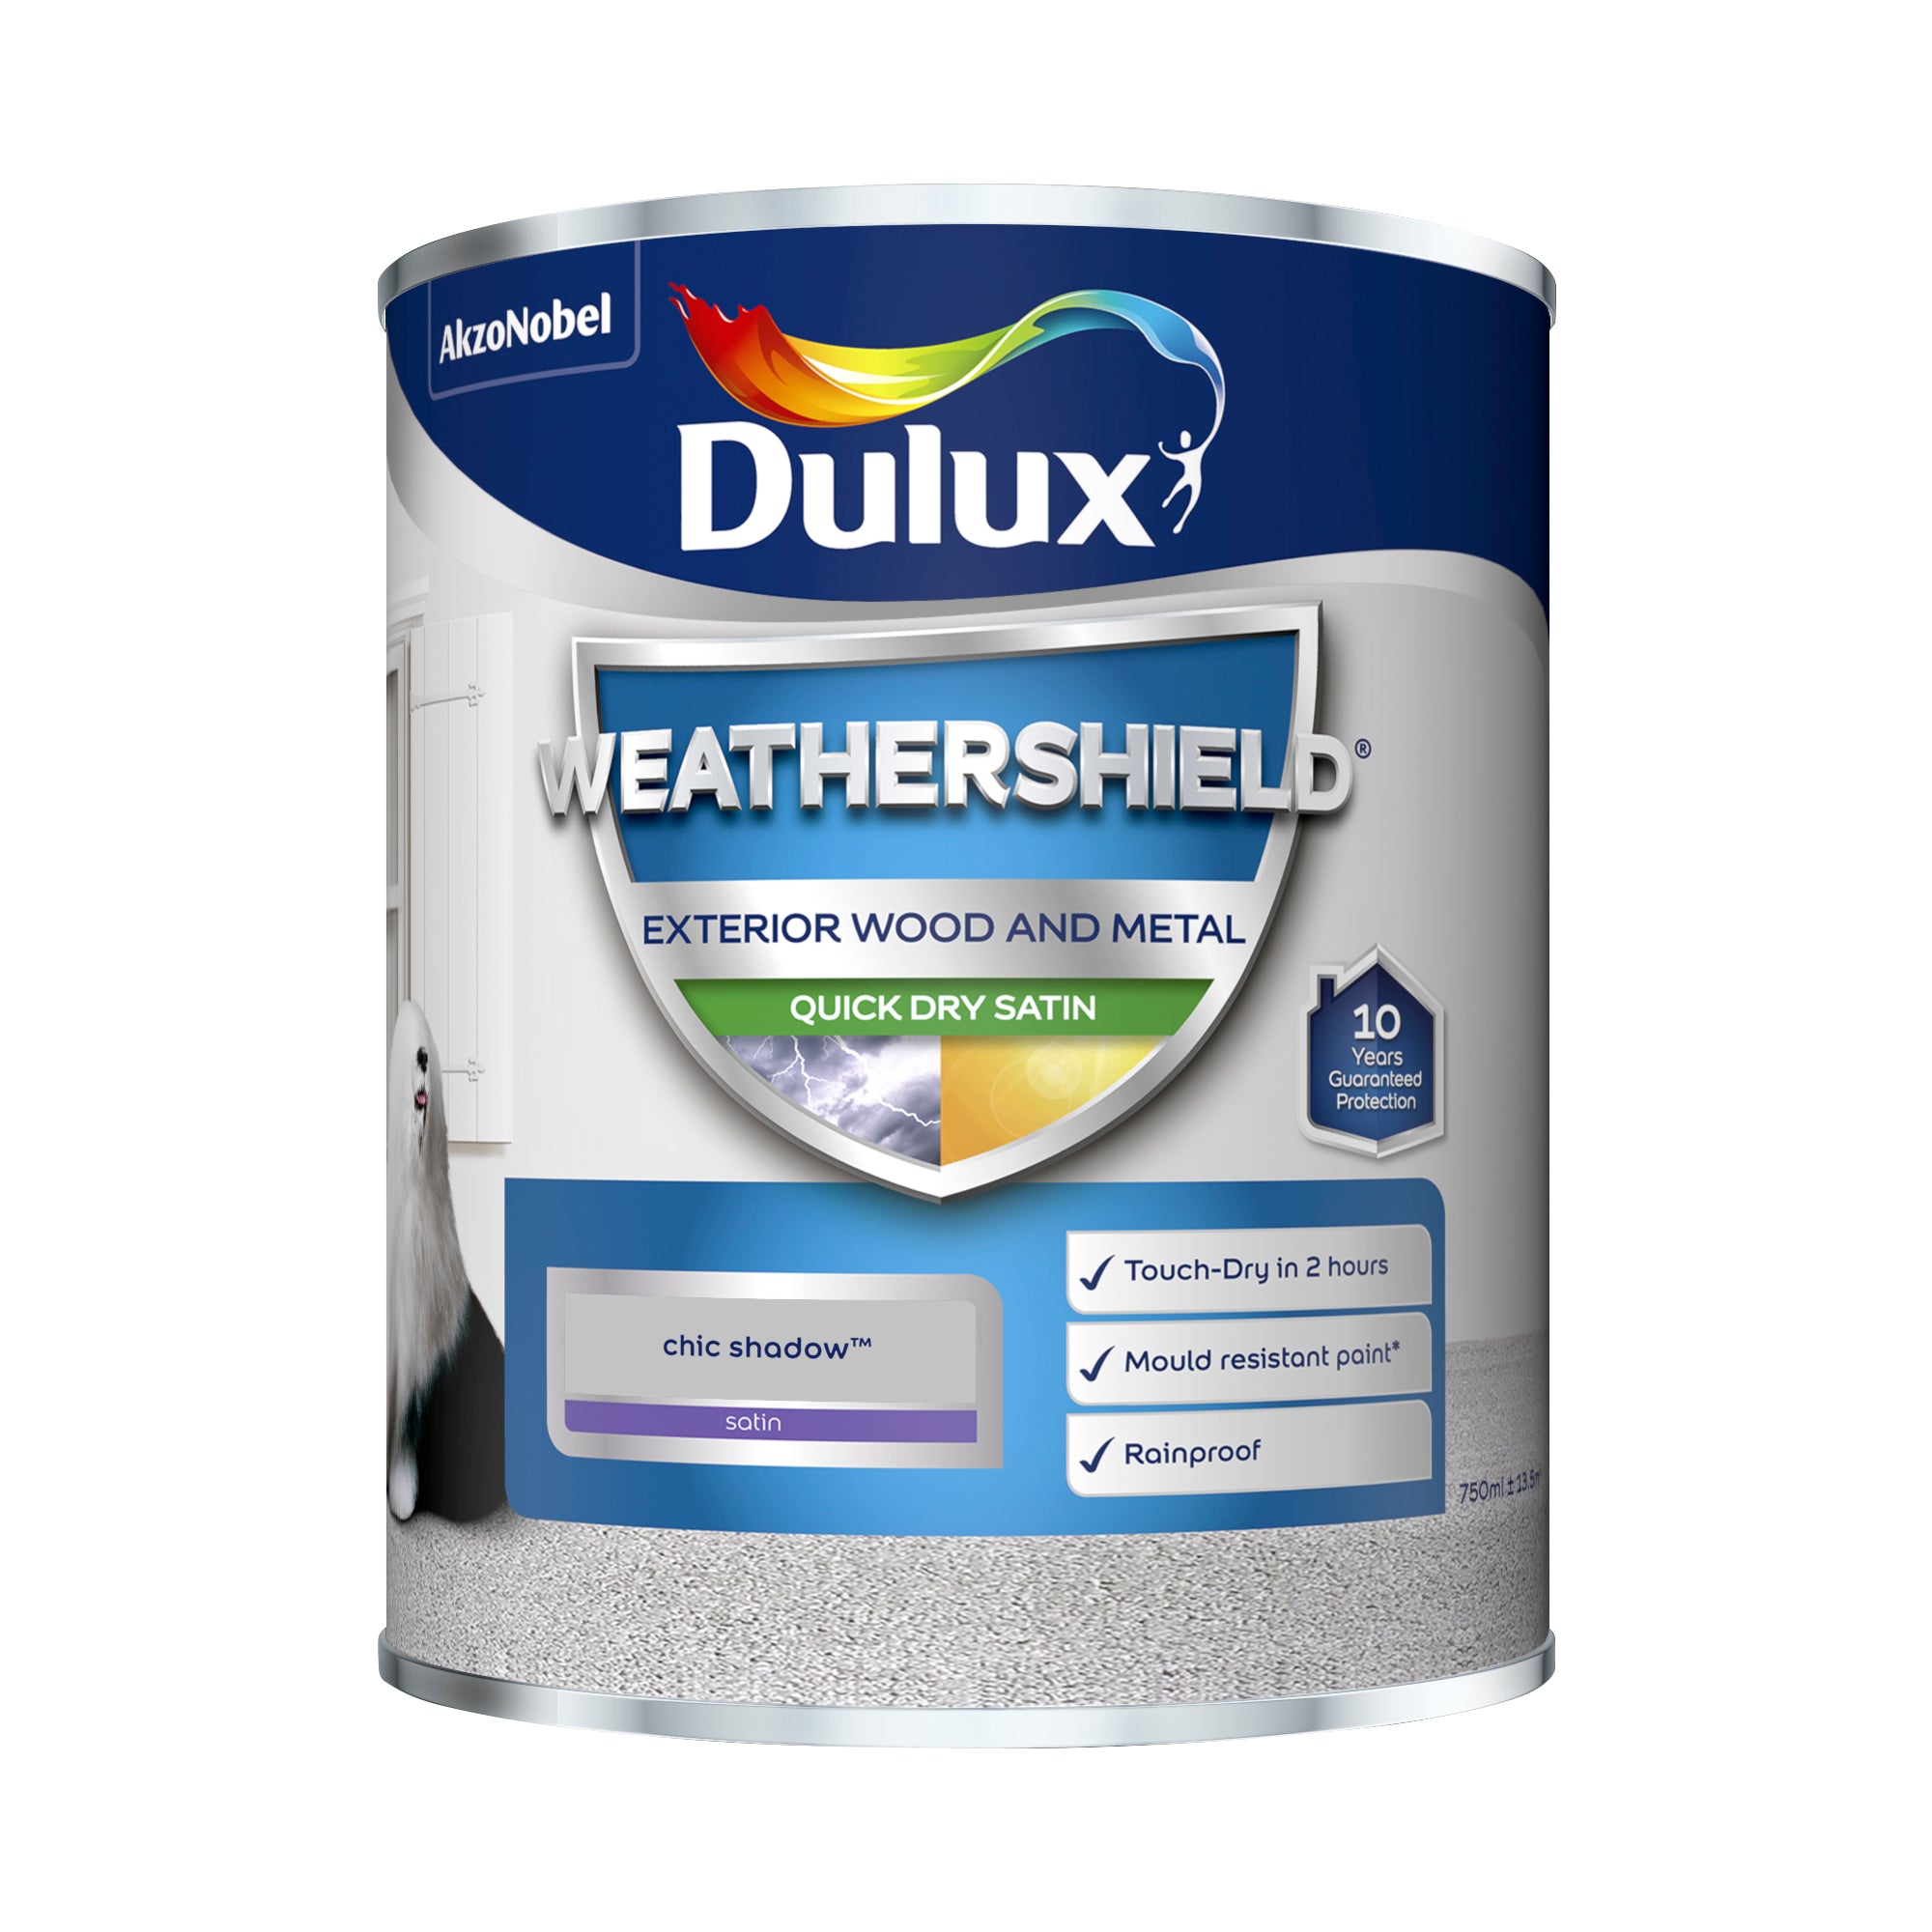 Dulux Weathershield Quick Dry Satin Chic Shadow 750ml